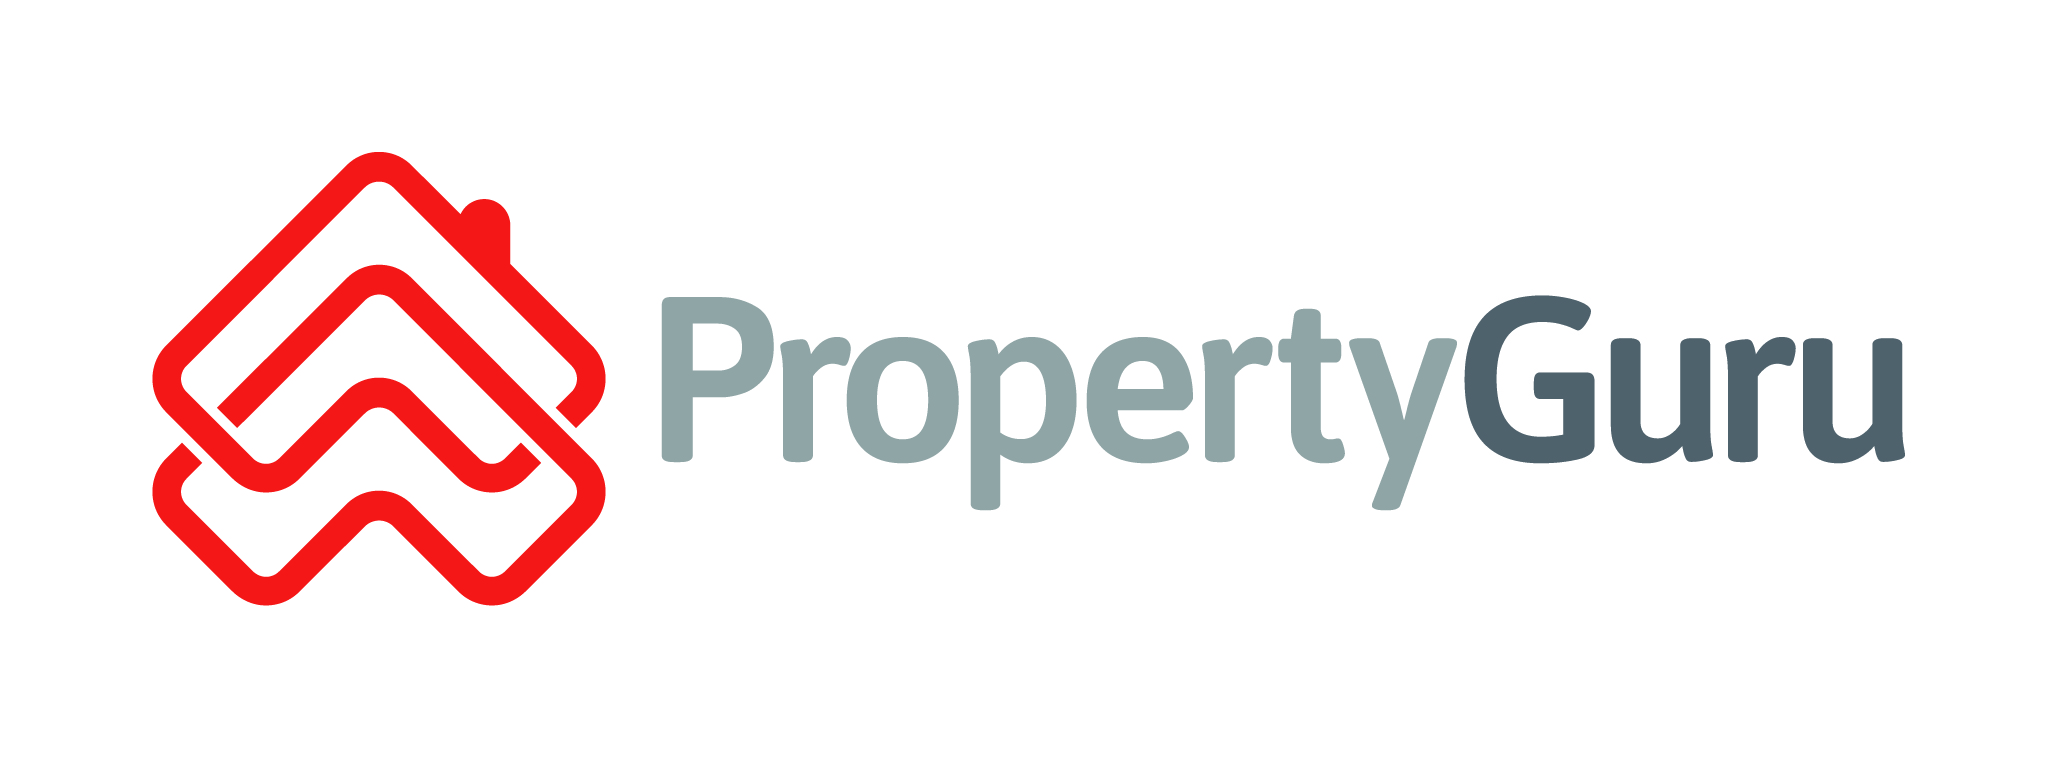 PropertyGuru raises USD 220 million from TPG and KKR